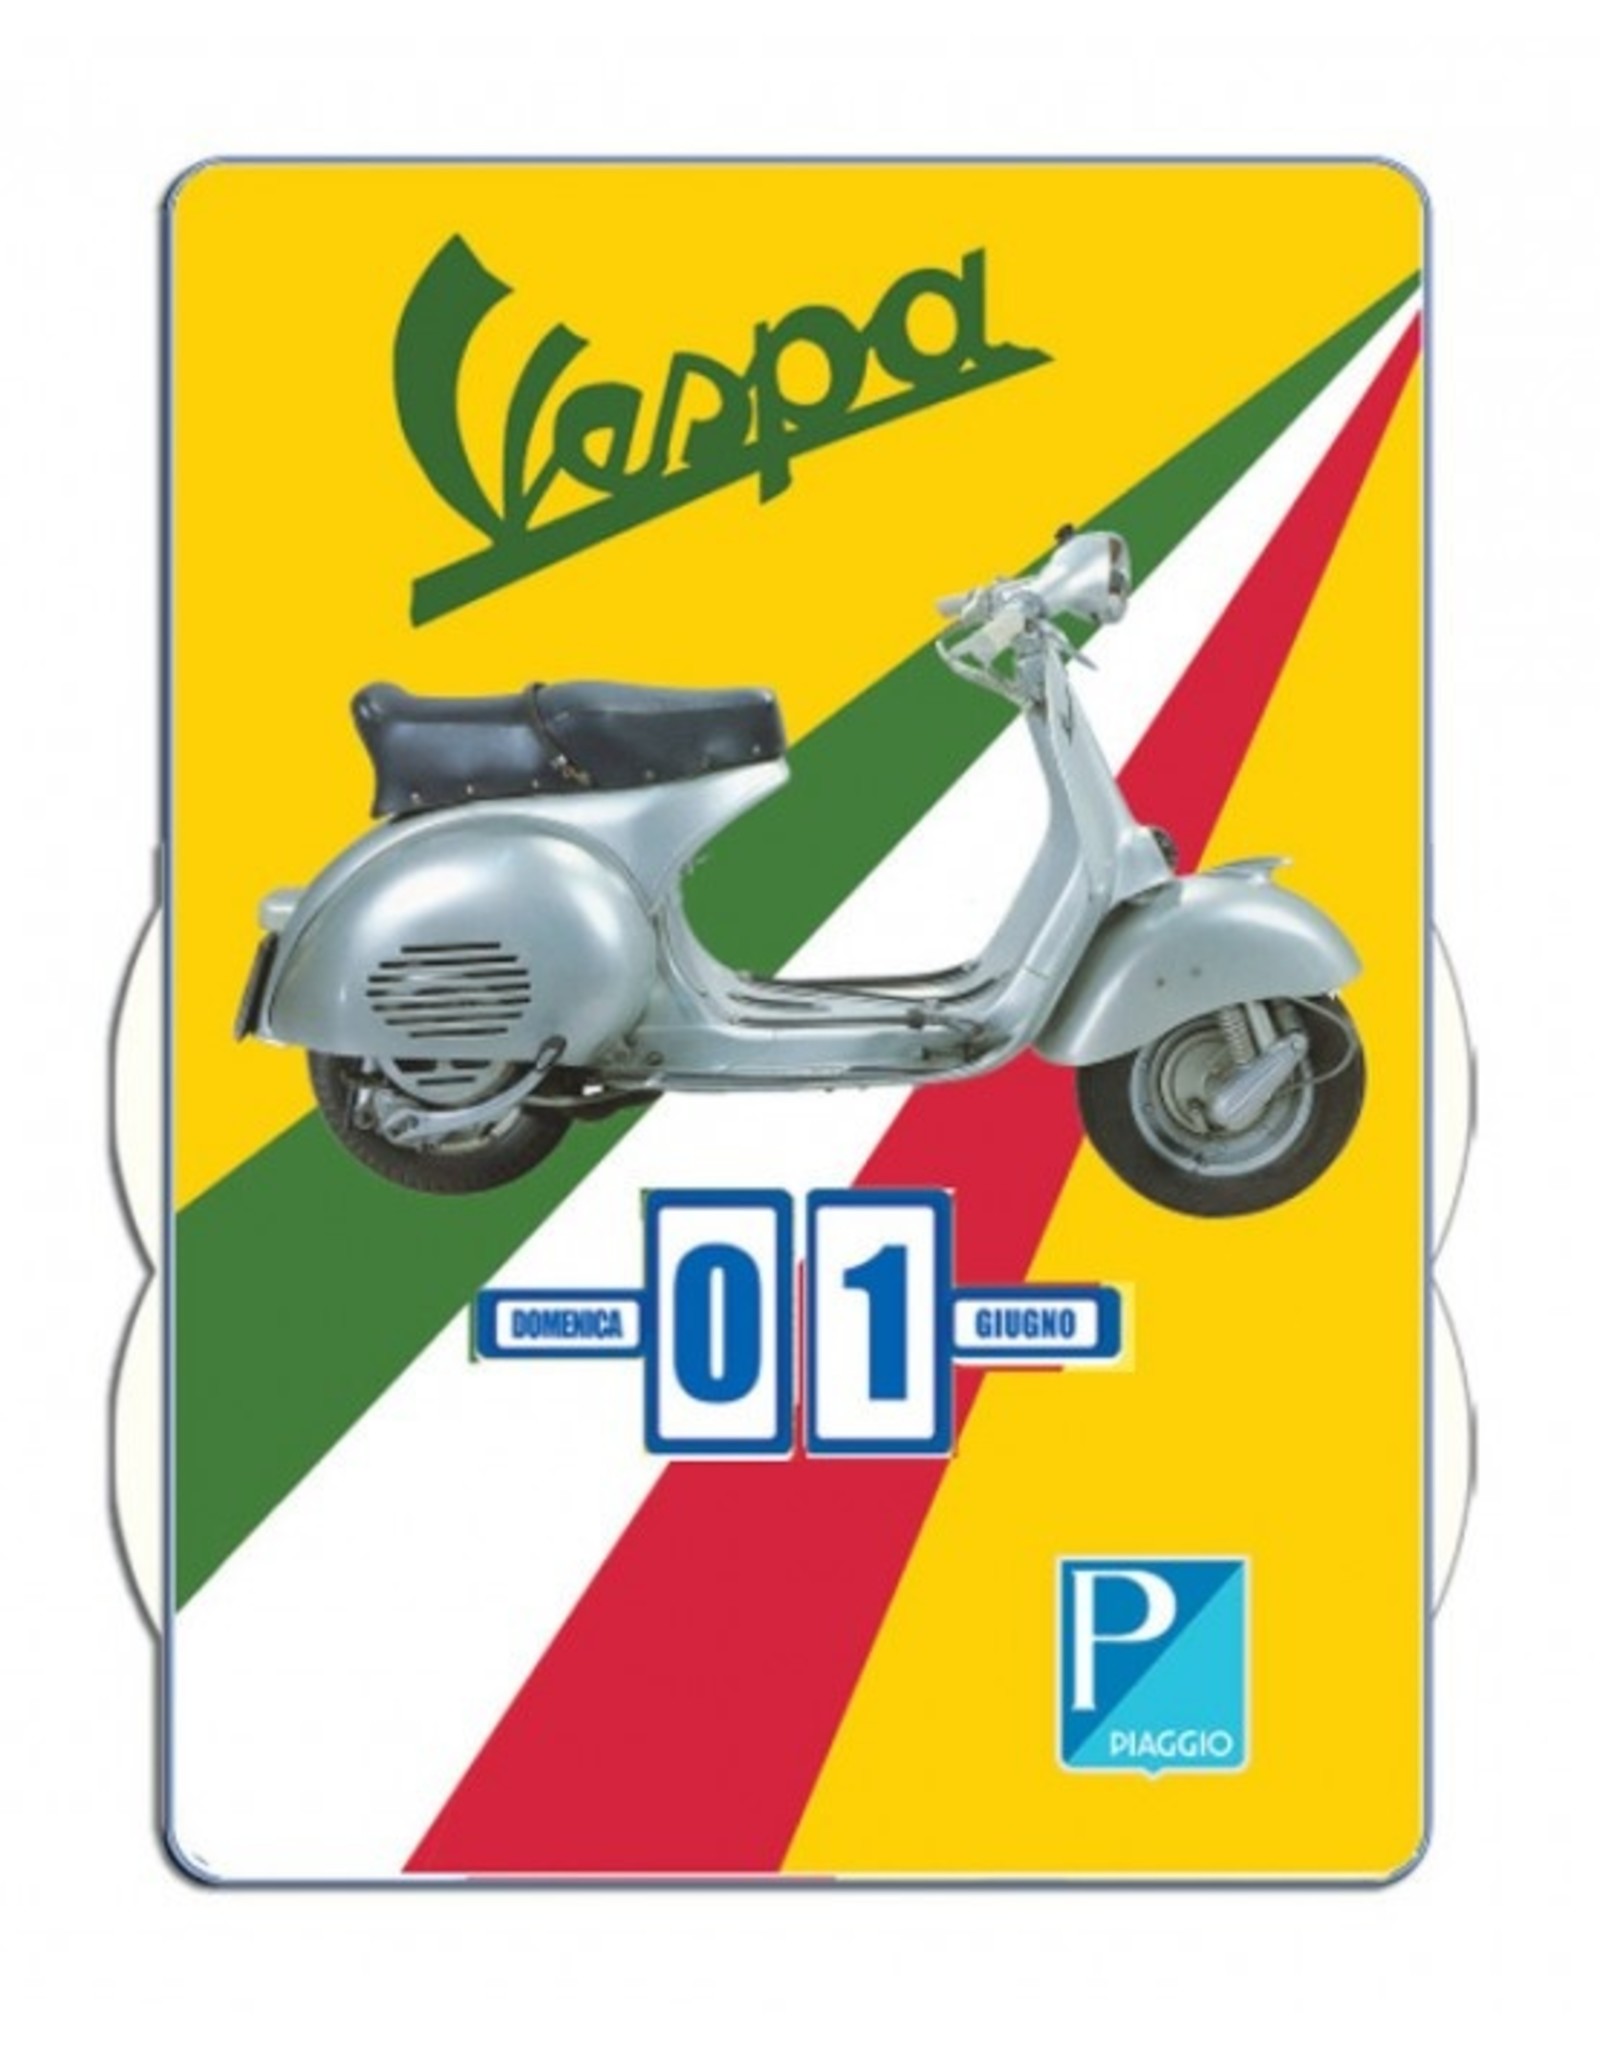 That's Italia Miscellaneous - Vespa and Italian Flag Perpetual Calendar